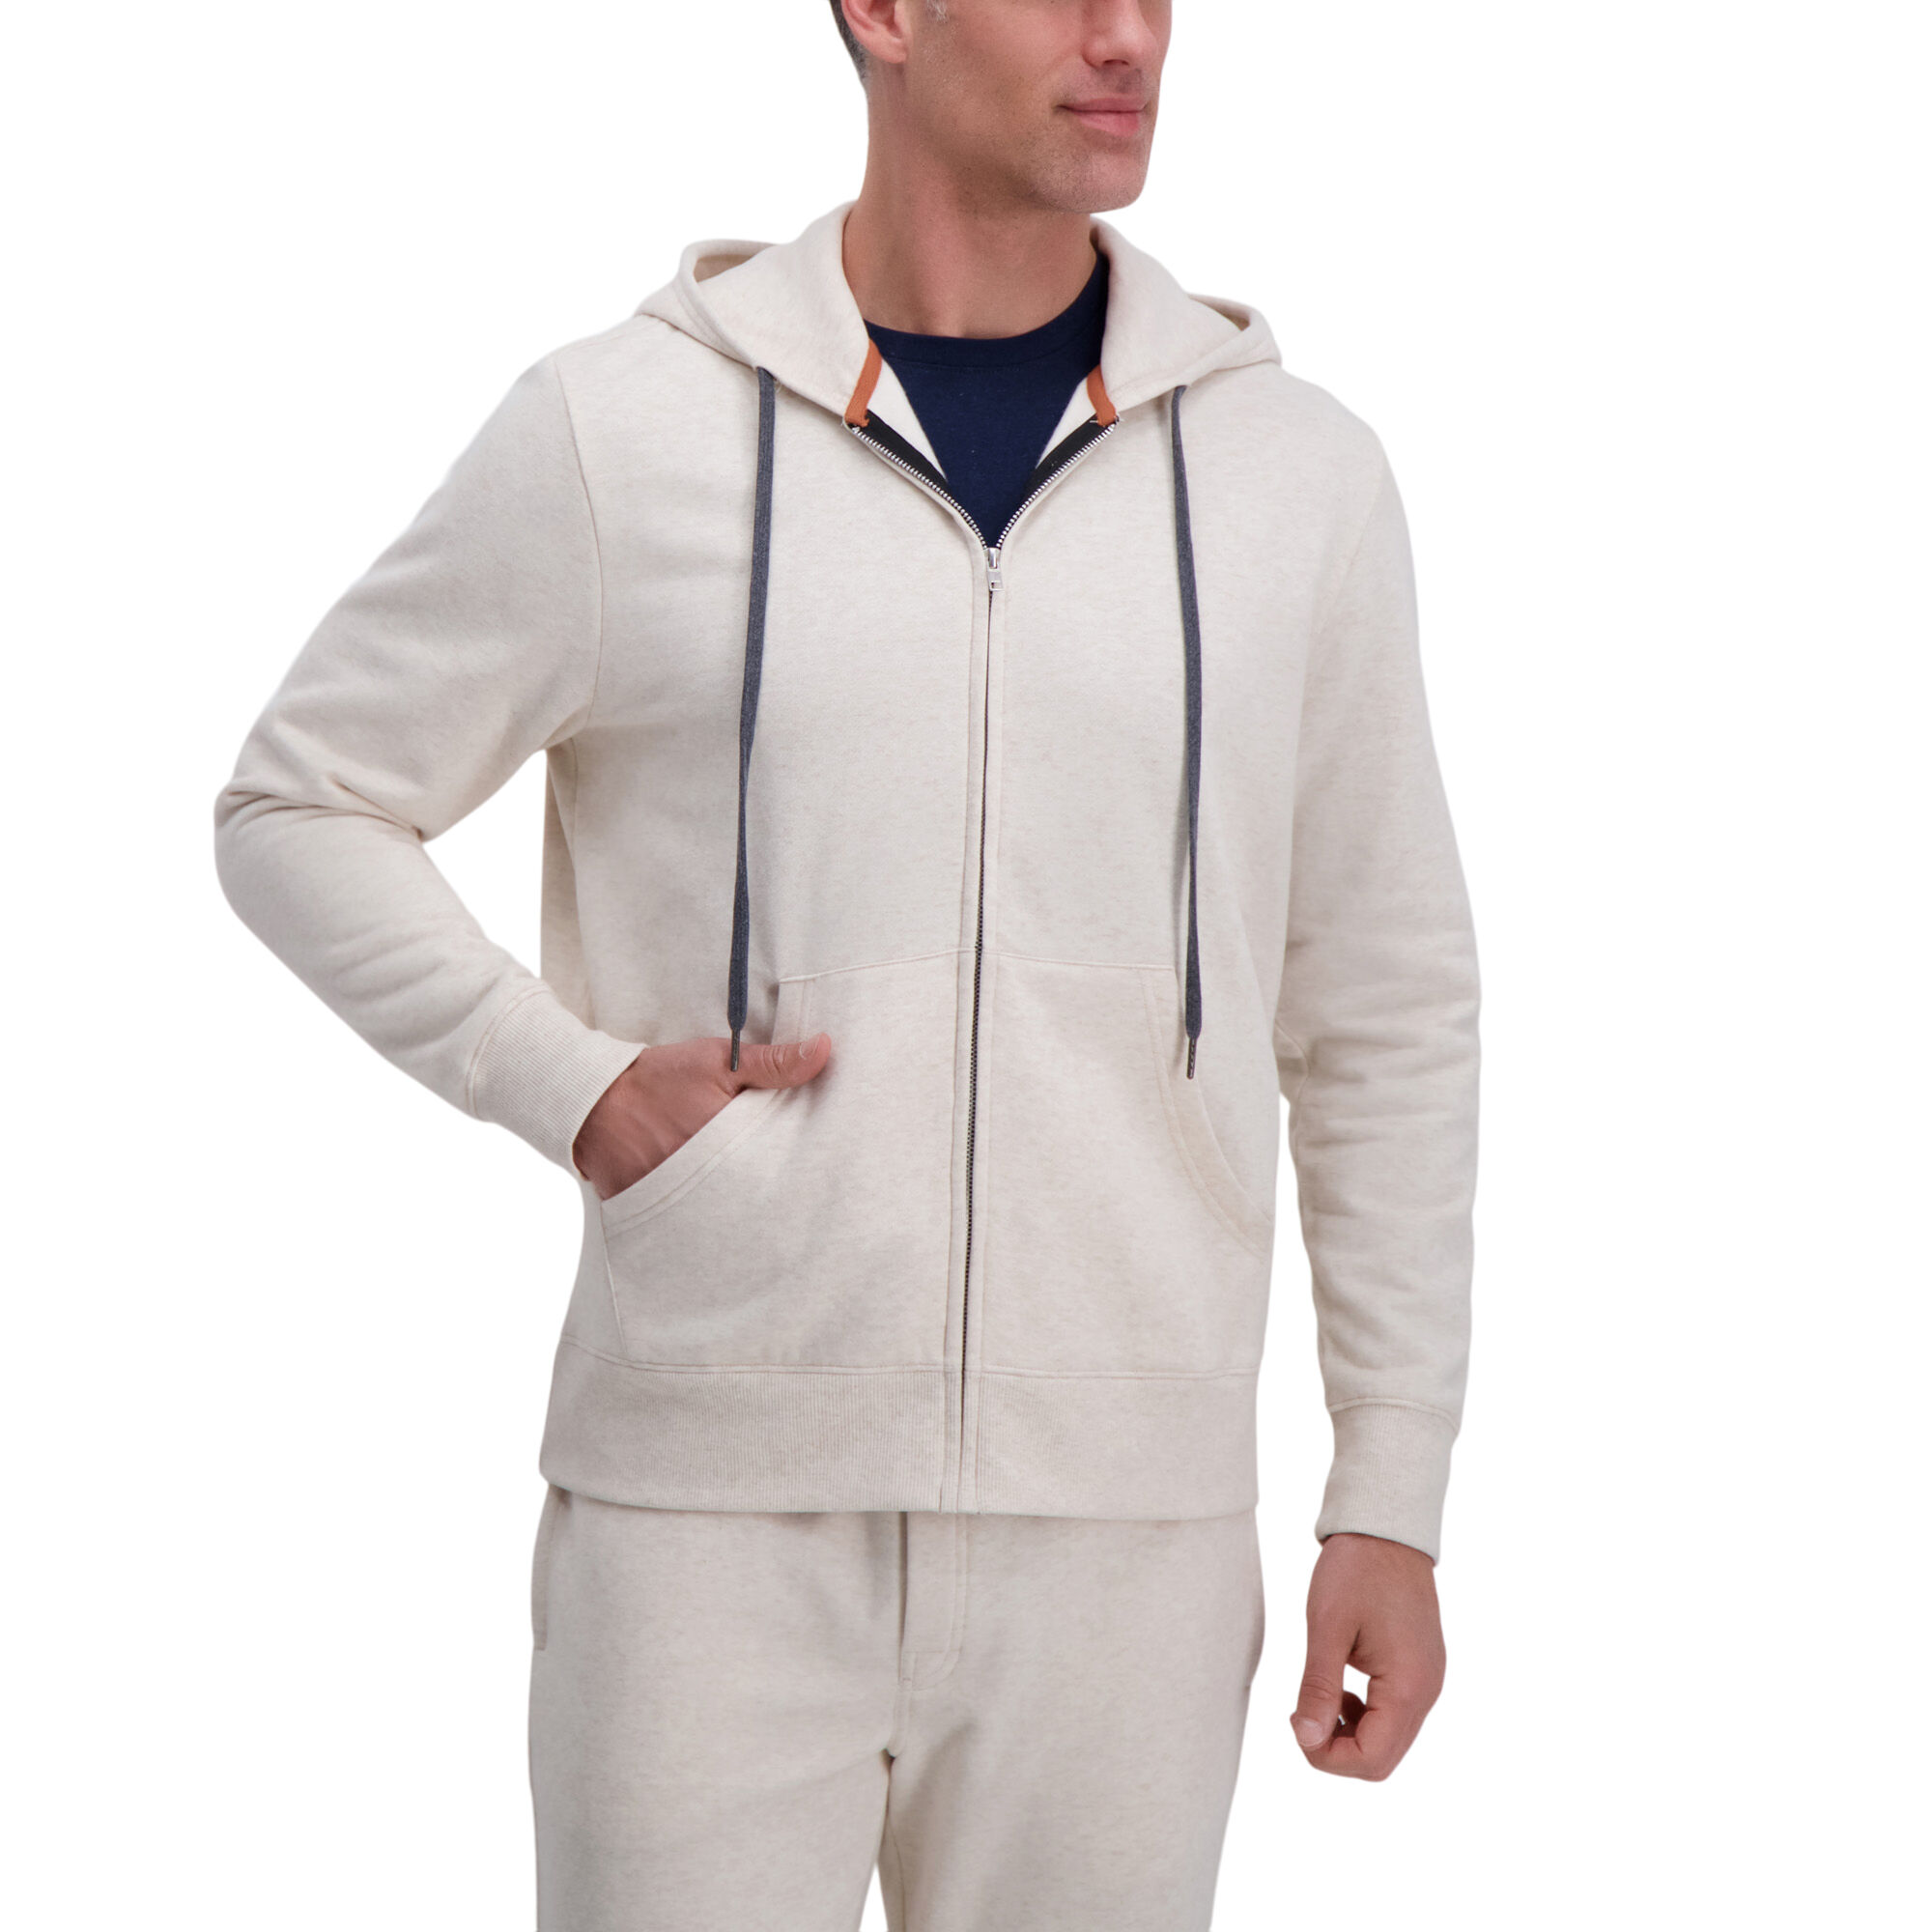 Haggar Full Zip Solid Fleece Hoodie Sweatshirt Oatmeal (UK70003 Clothing Shirts & Tops) photo